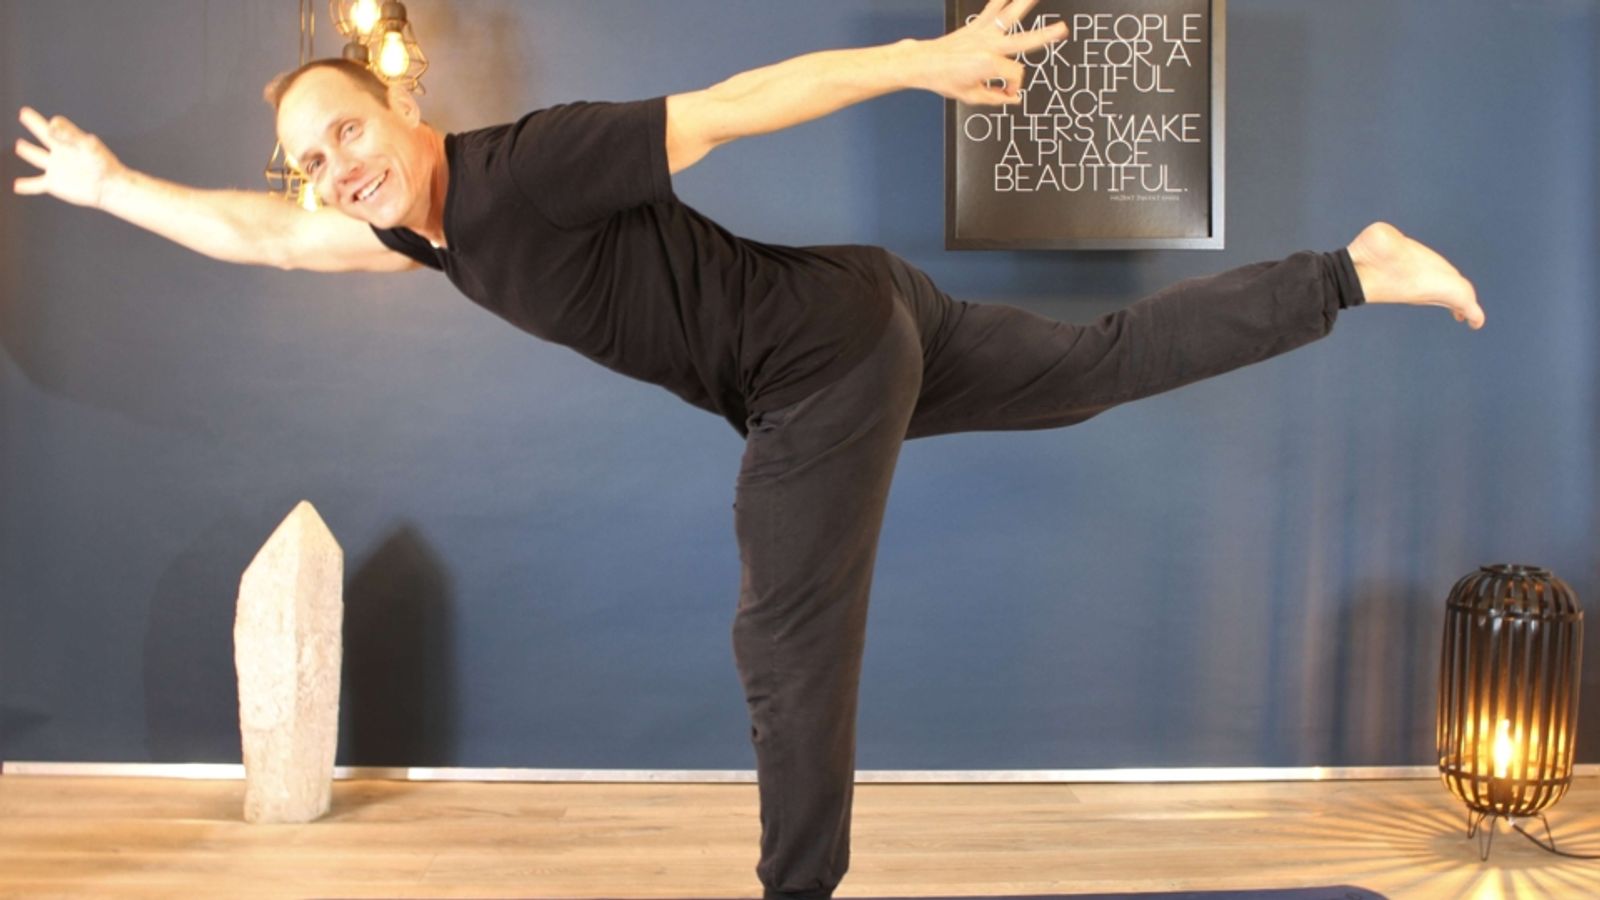 Dive deeper into Yoga - Balance your life